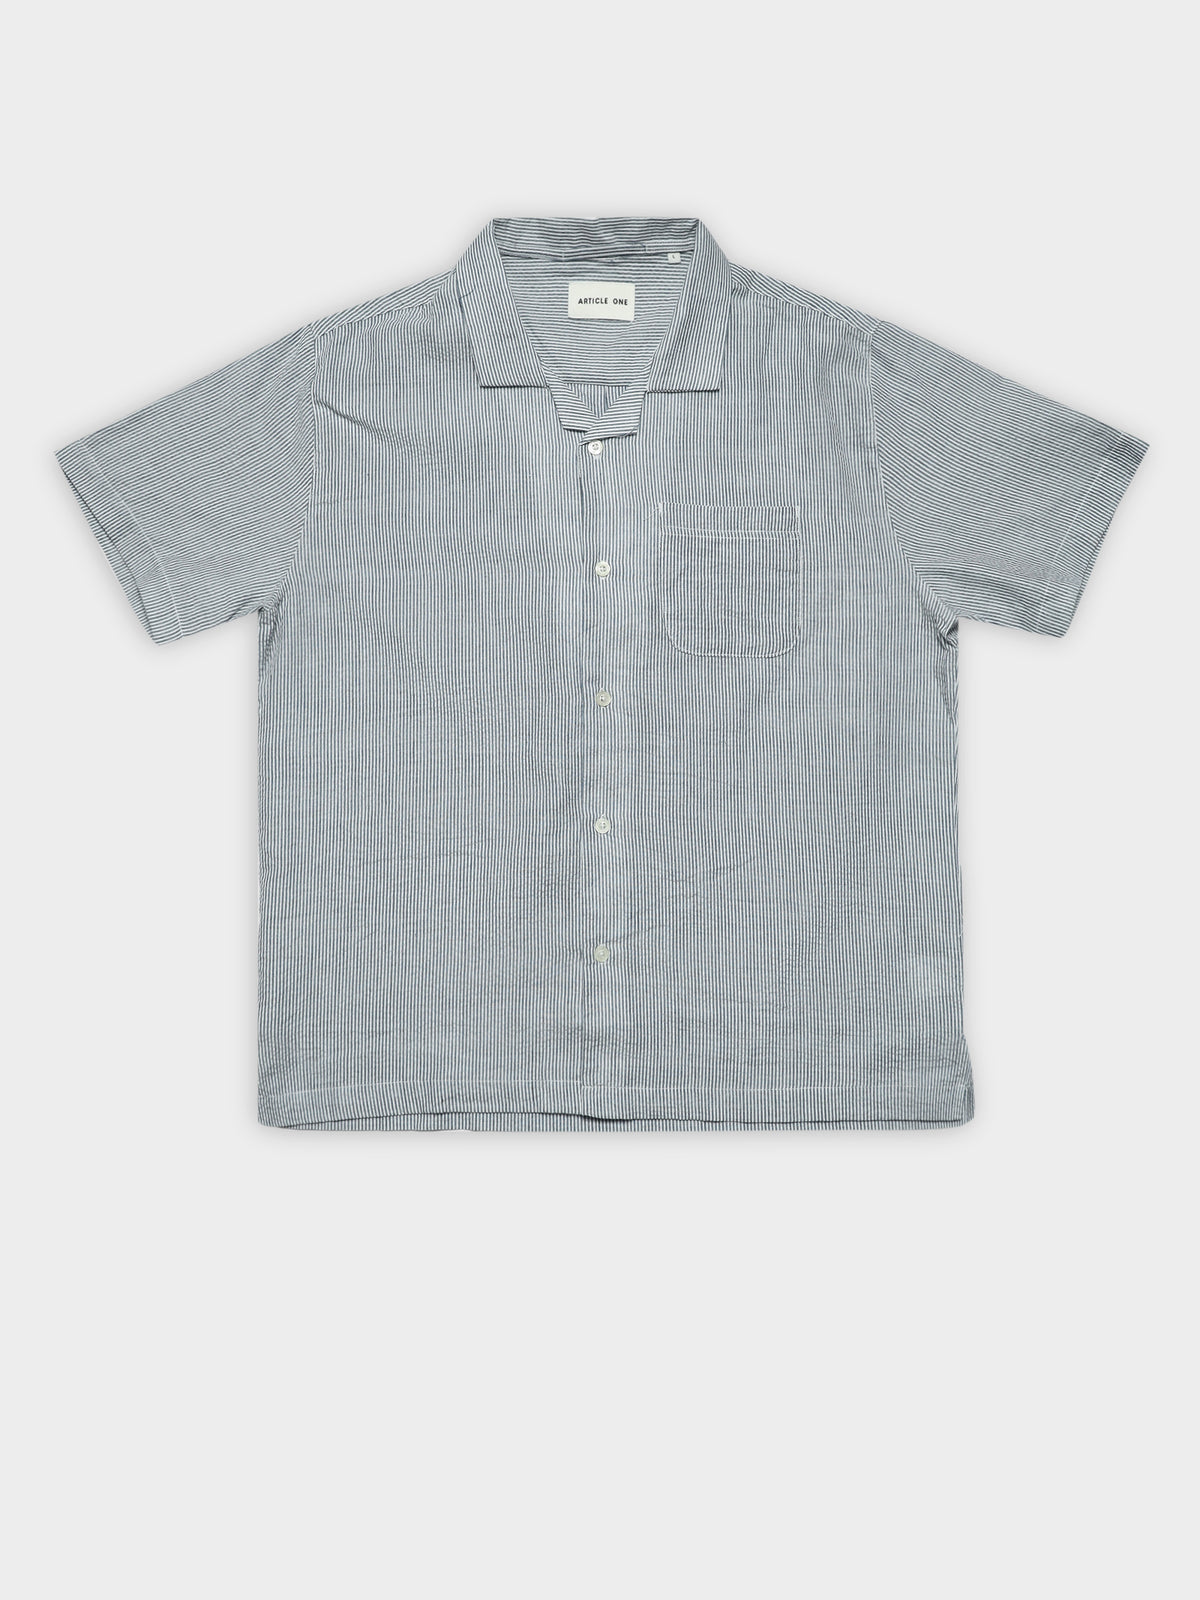 Wilfred Short Sleeve Shirt in Blue &amp; White Stripe